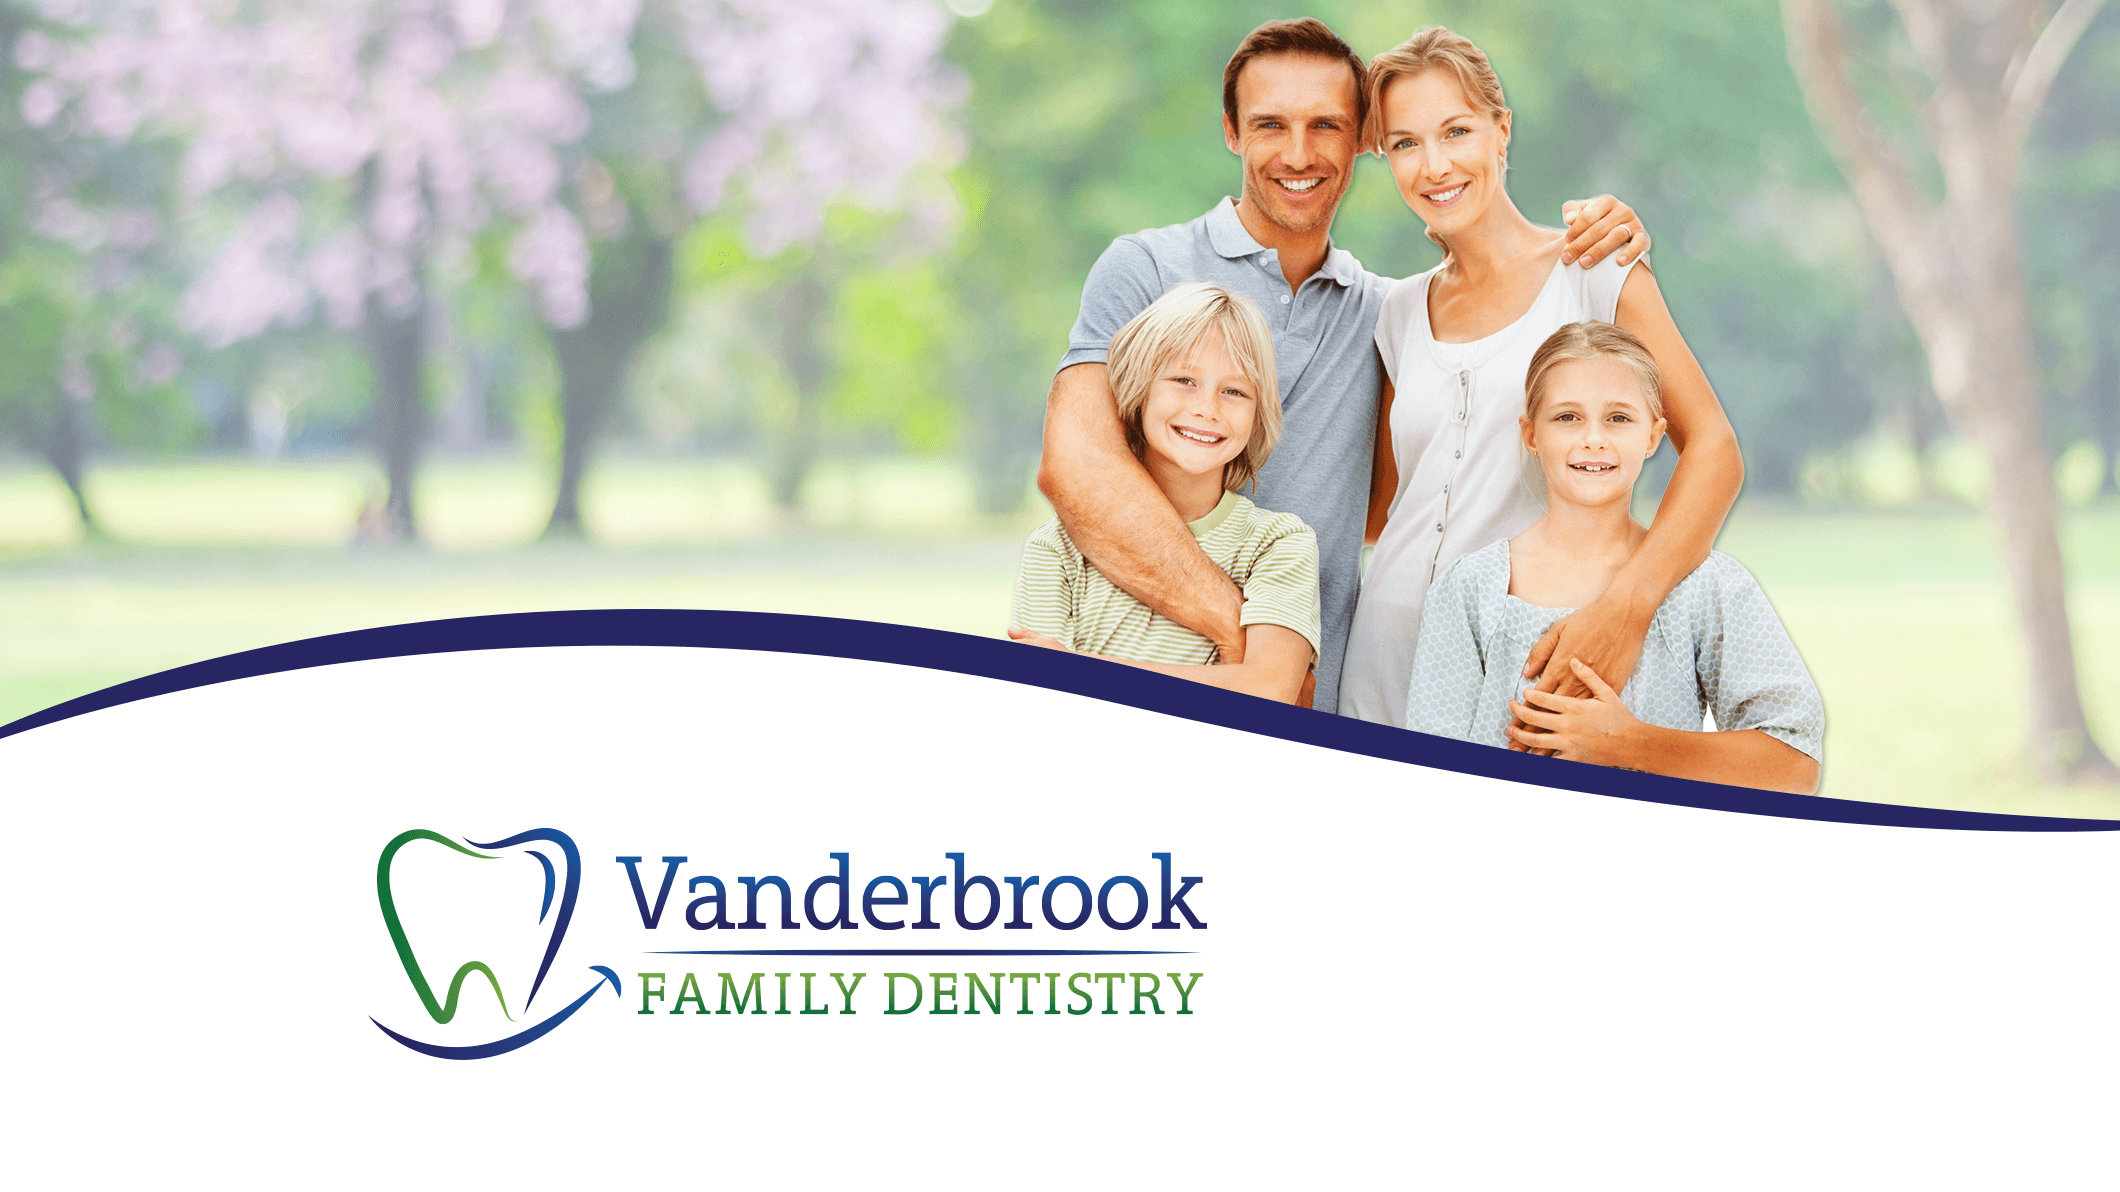 Vanderbrook Family Dentistry